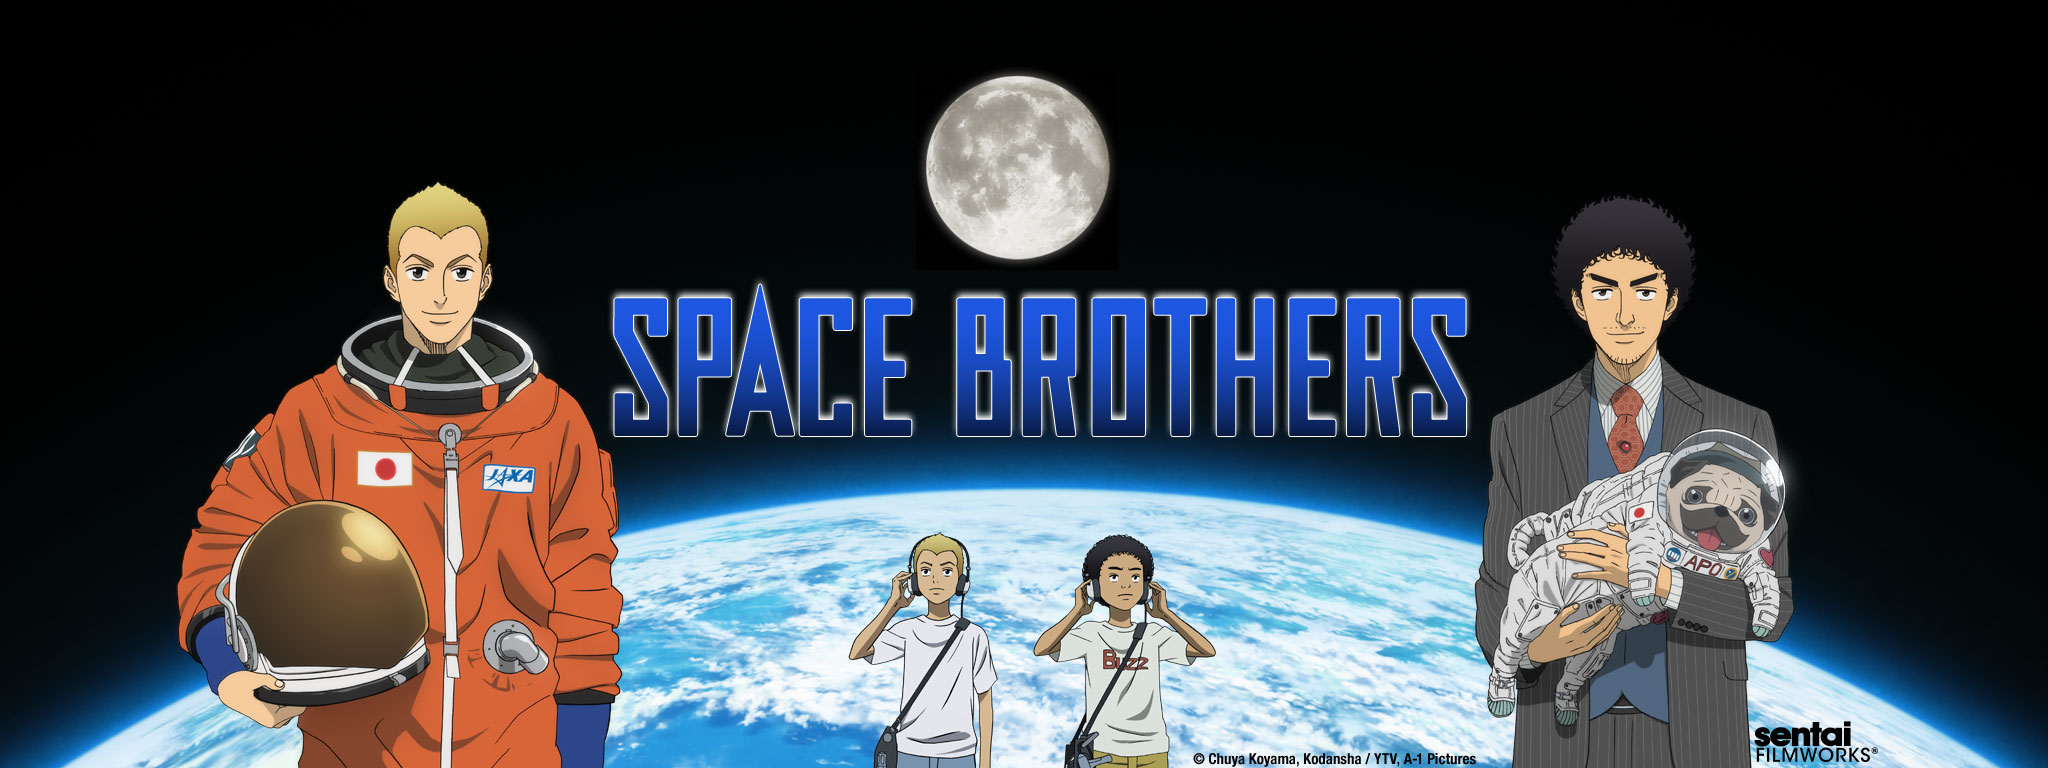 Space Brothers Sentai Filmworks